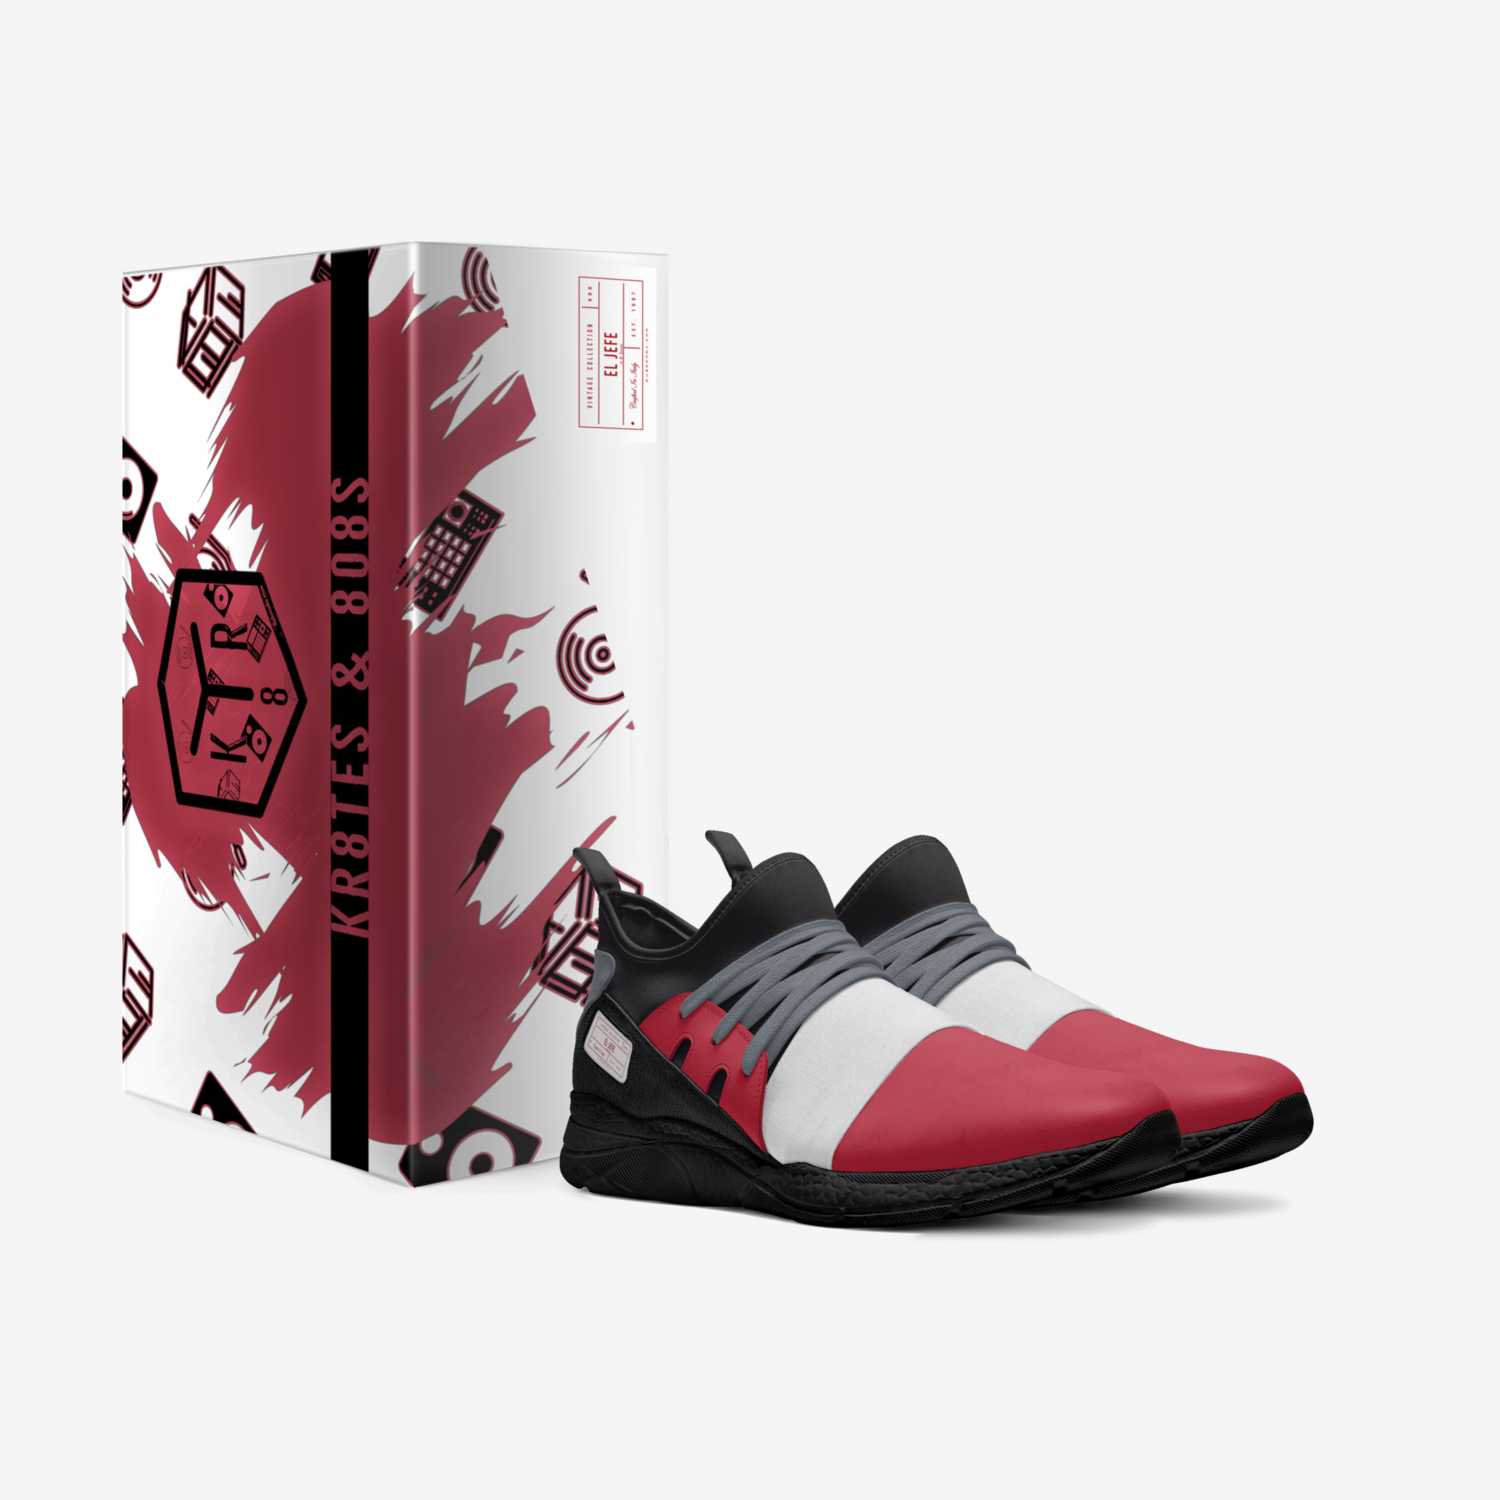 El Jefe custom made in Italy shoes by Dj Skooda | Box view